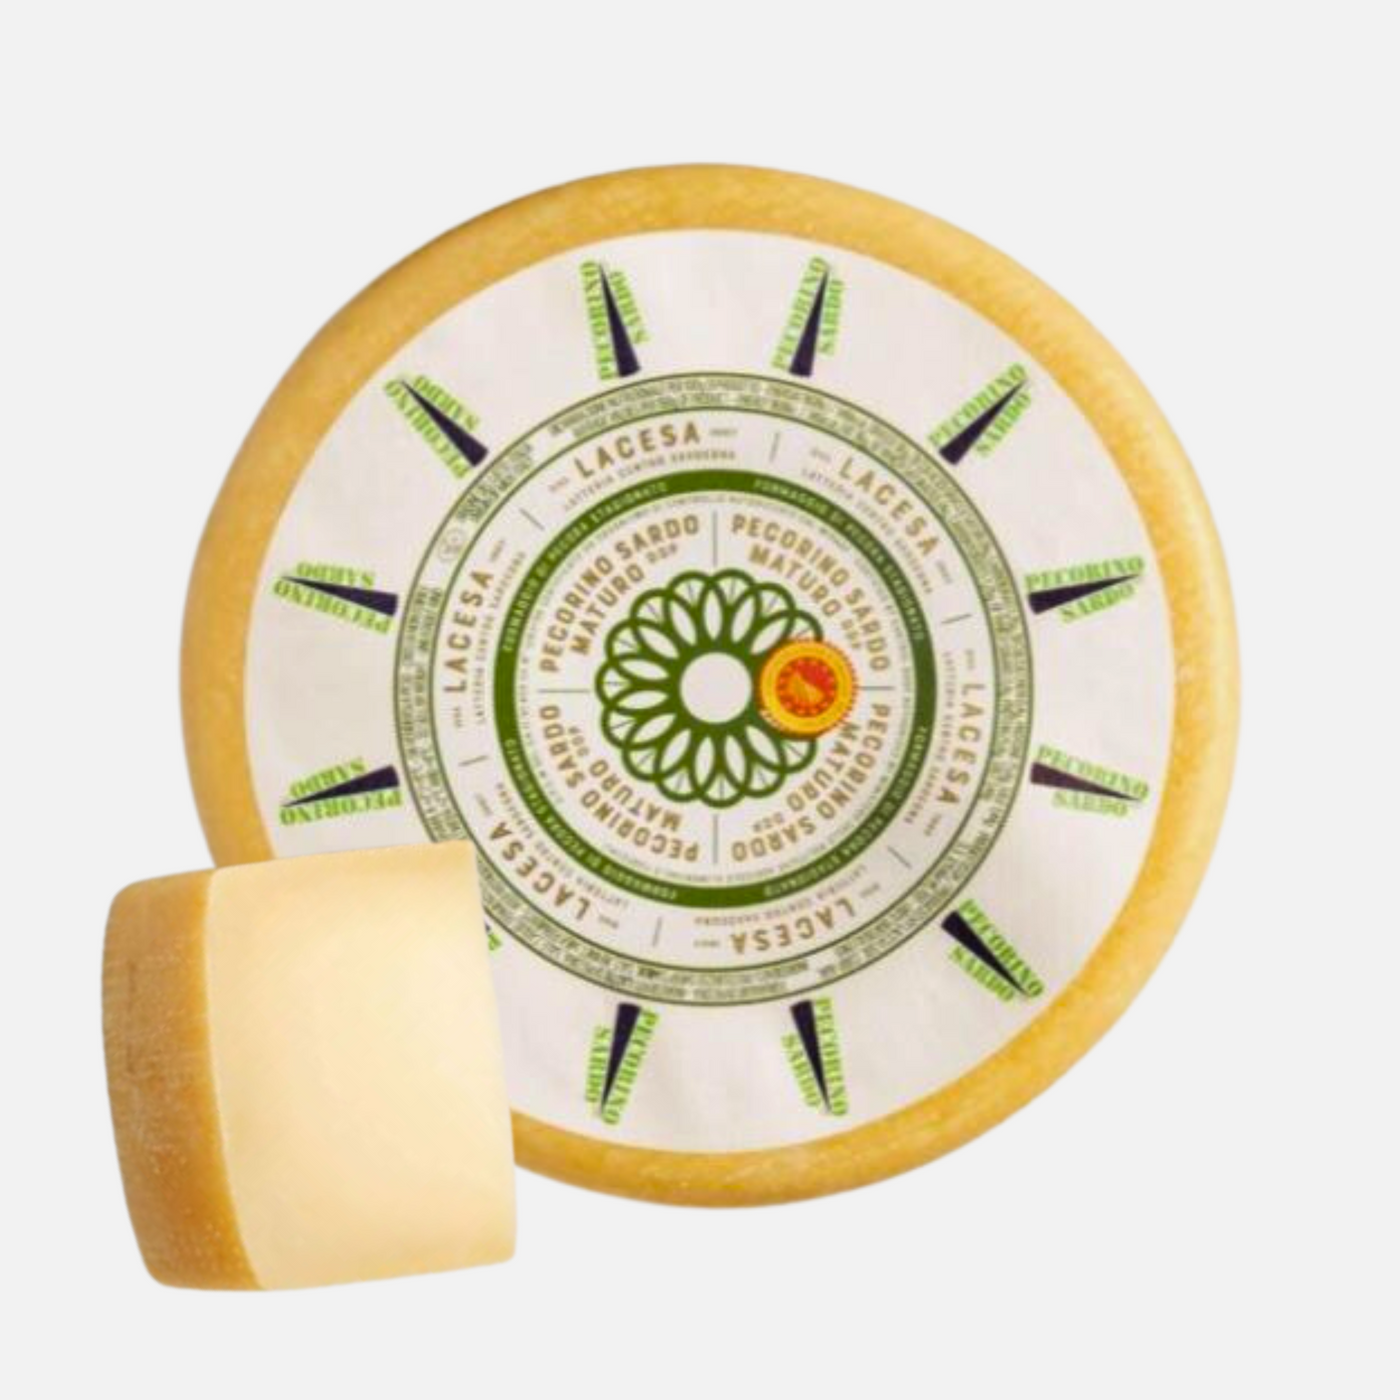 Pecorino Sardo Cheese